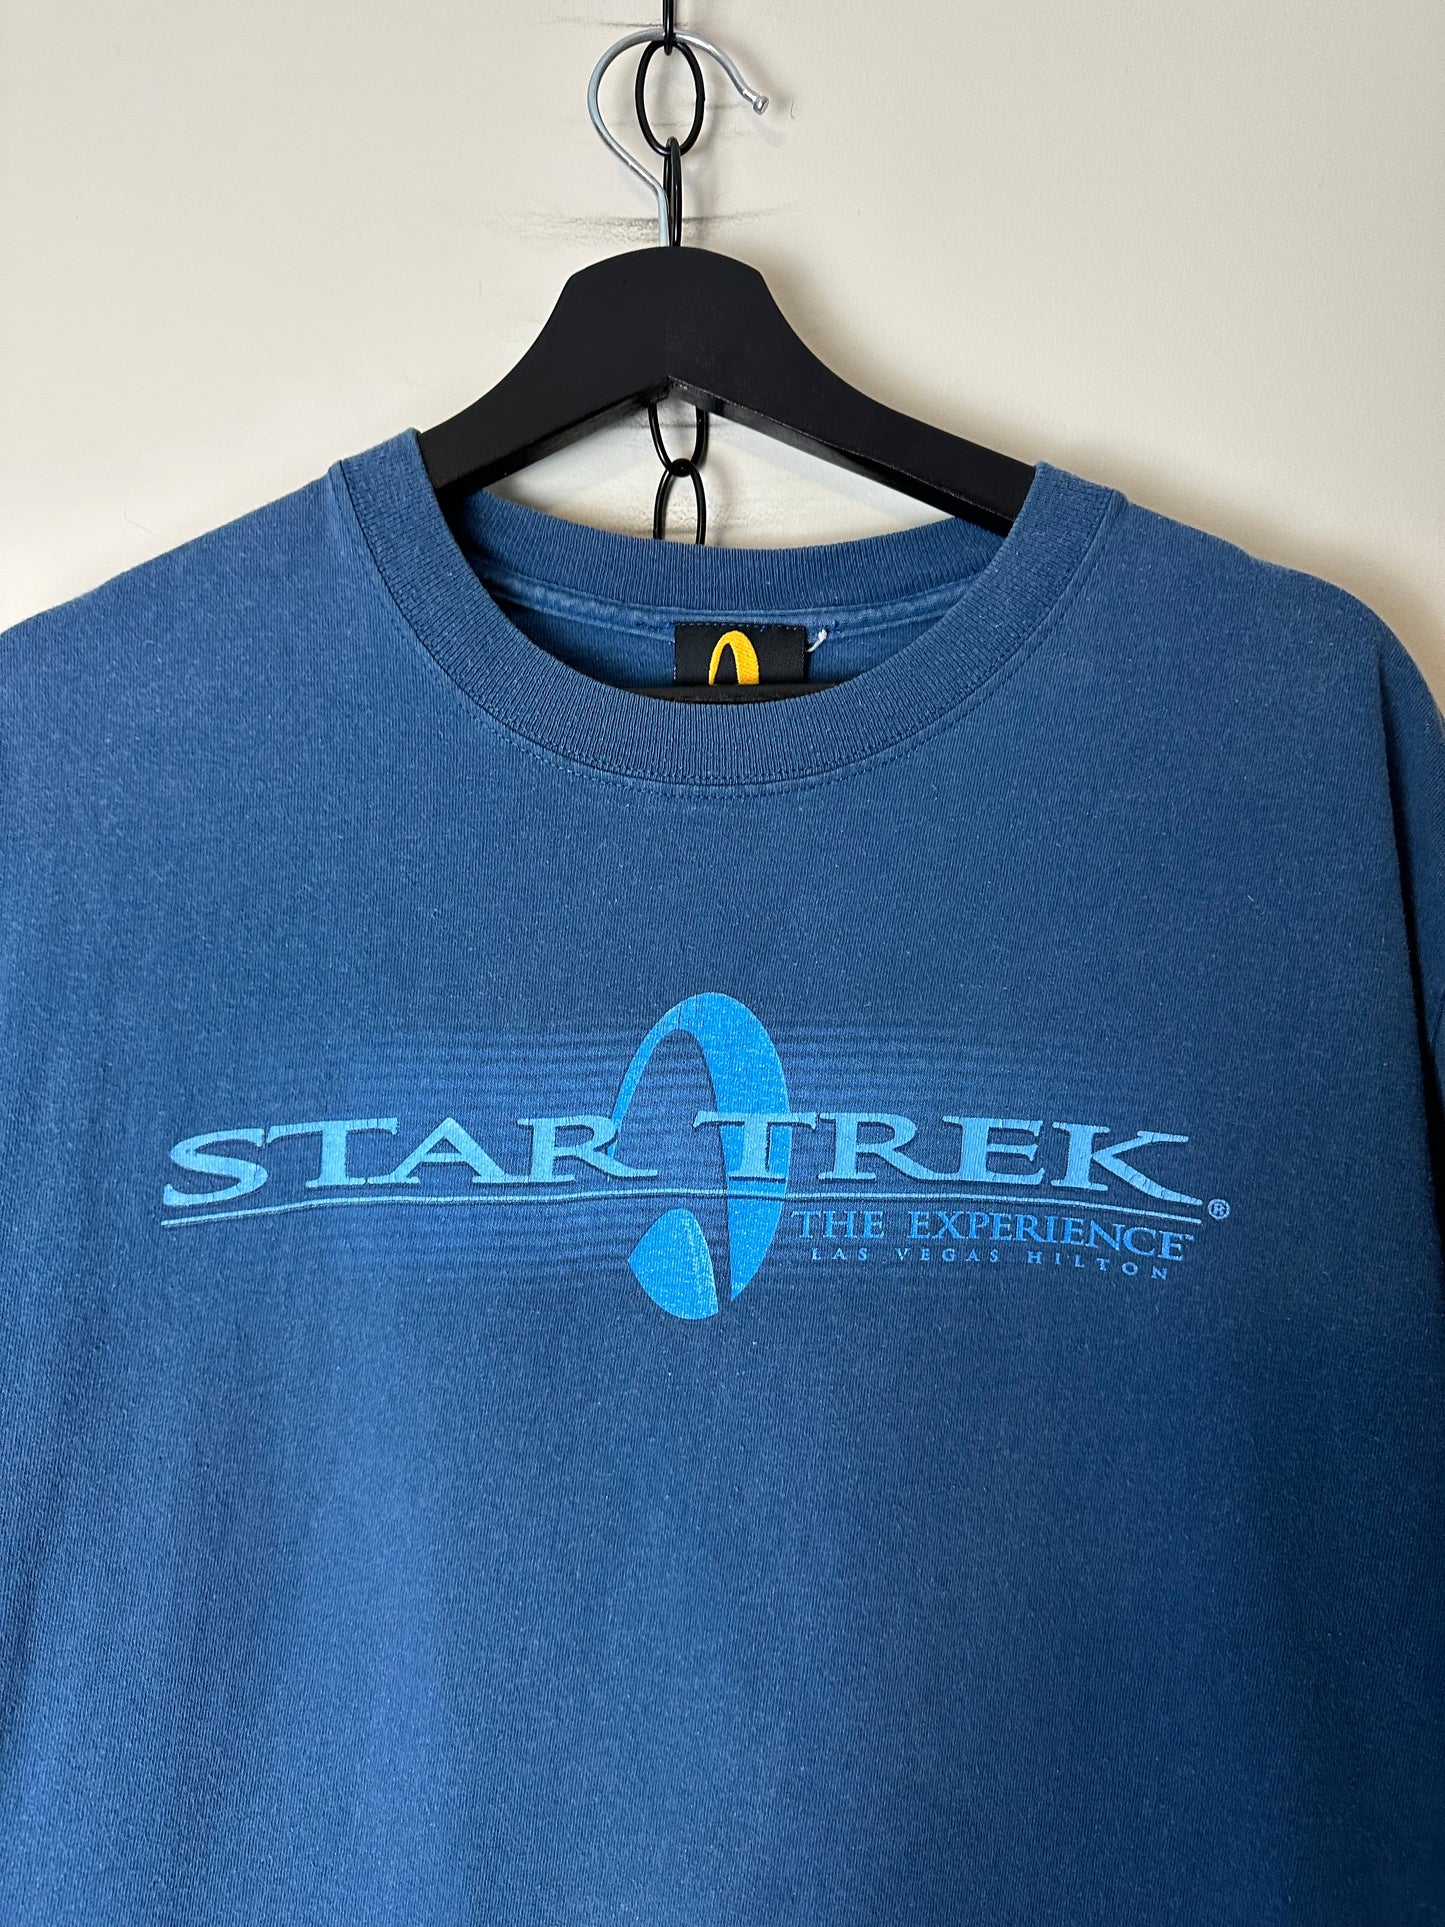 Vintage Star Trek The Experience Las Vegas T-shirt - L